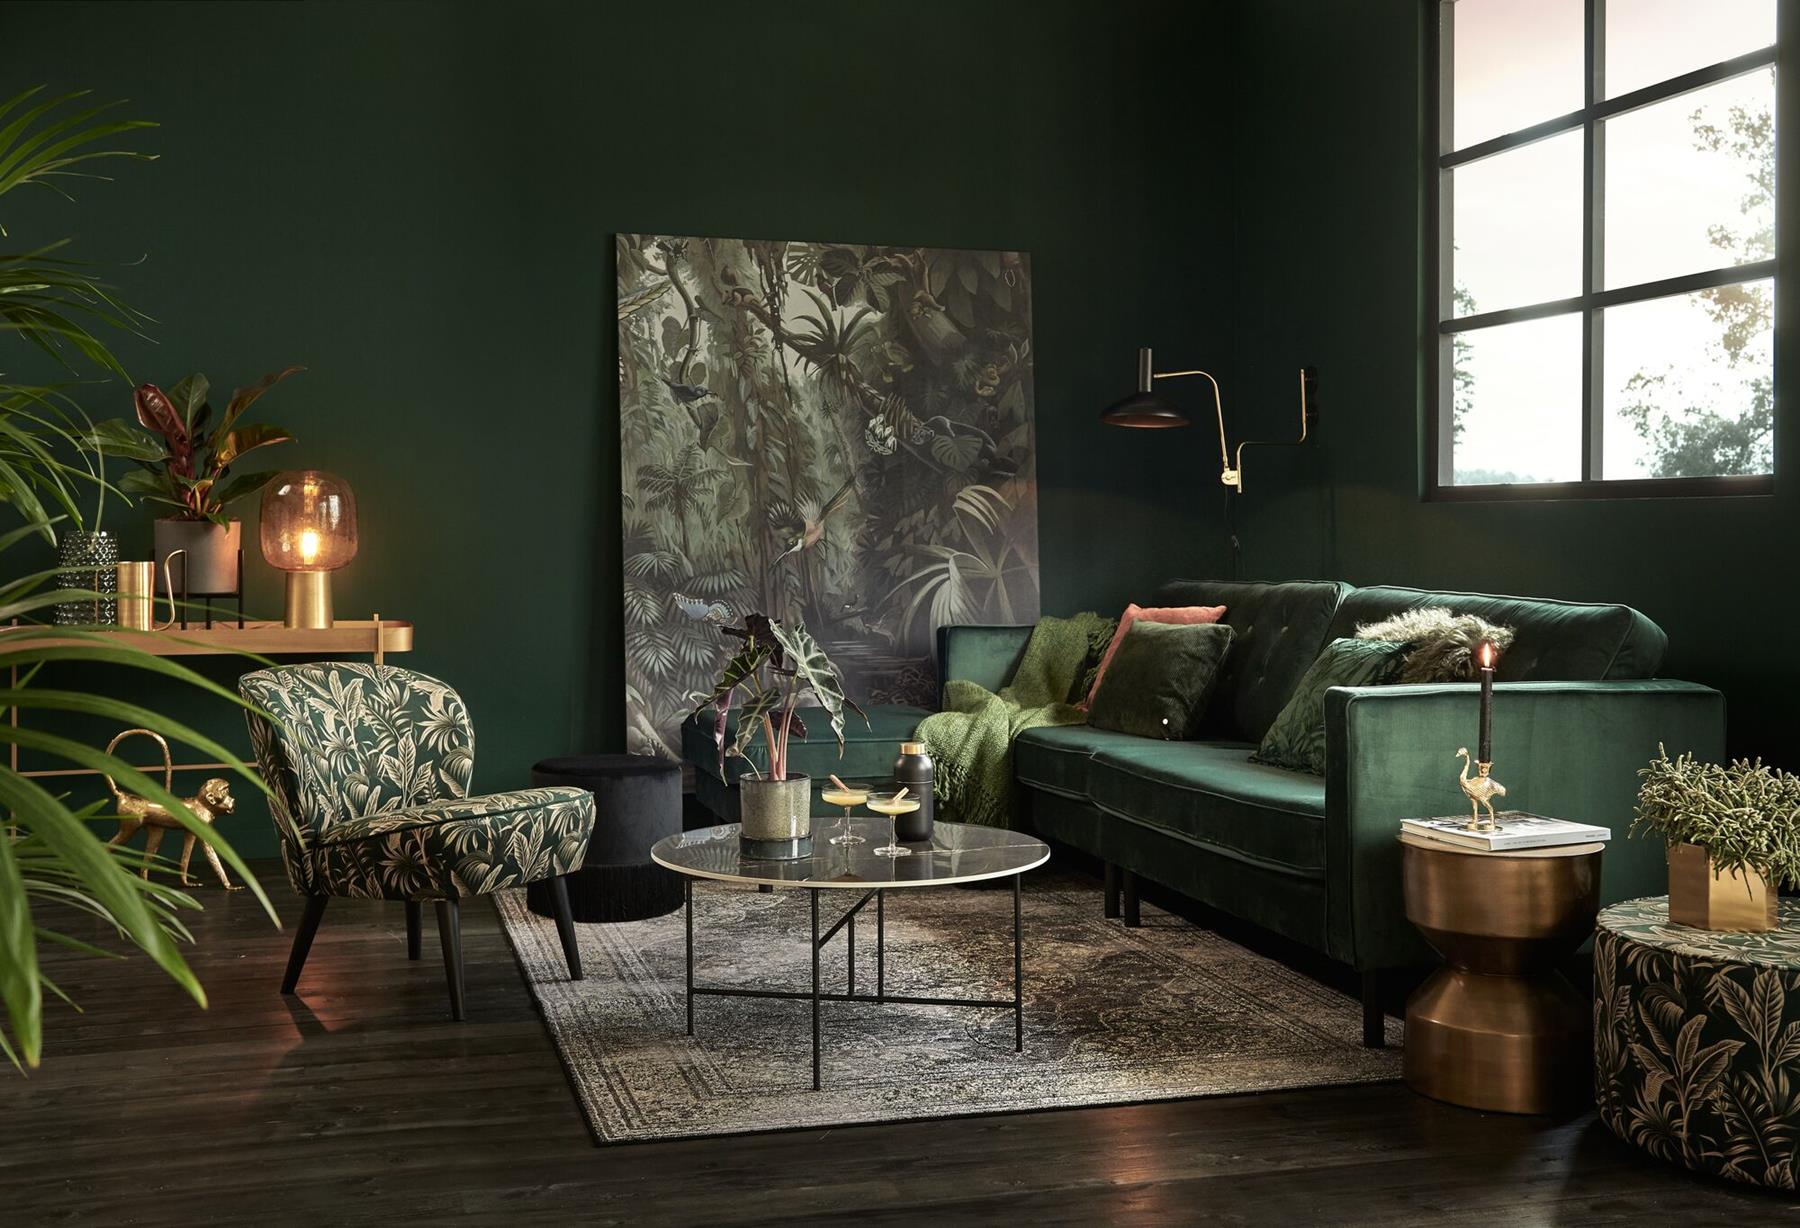 Kosten lens pk Shop de look: groene woonkamer bomvol luxe